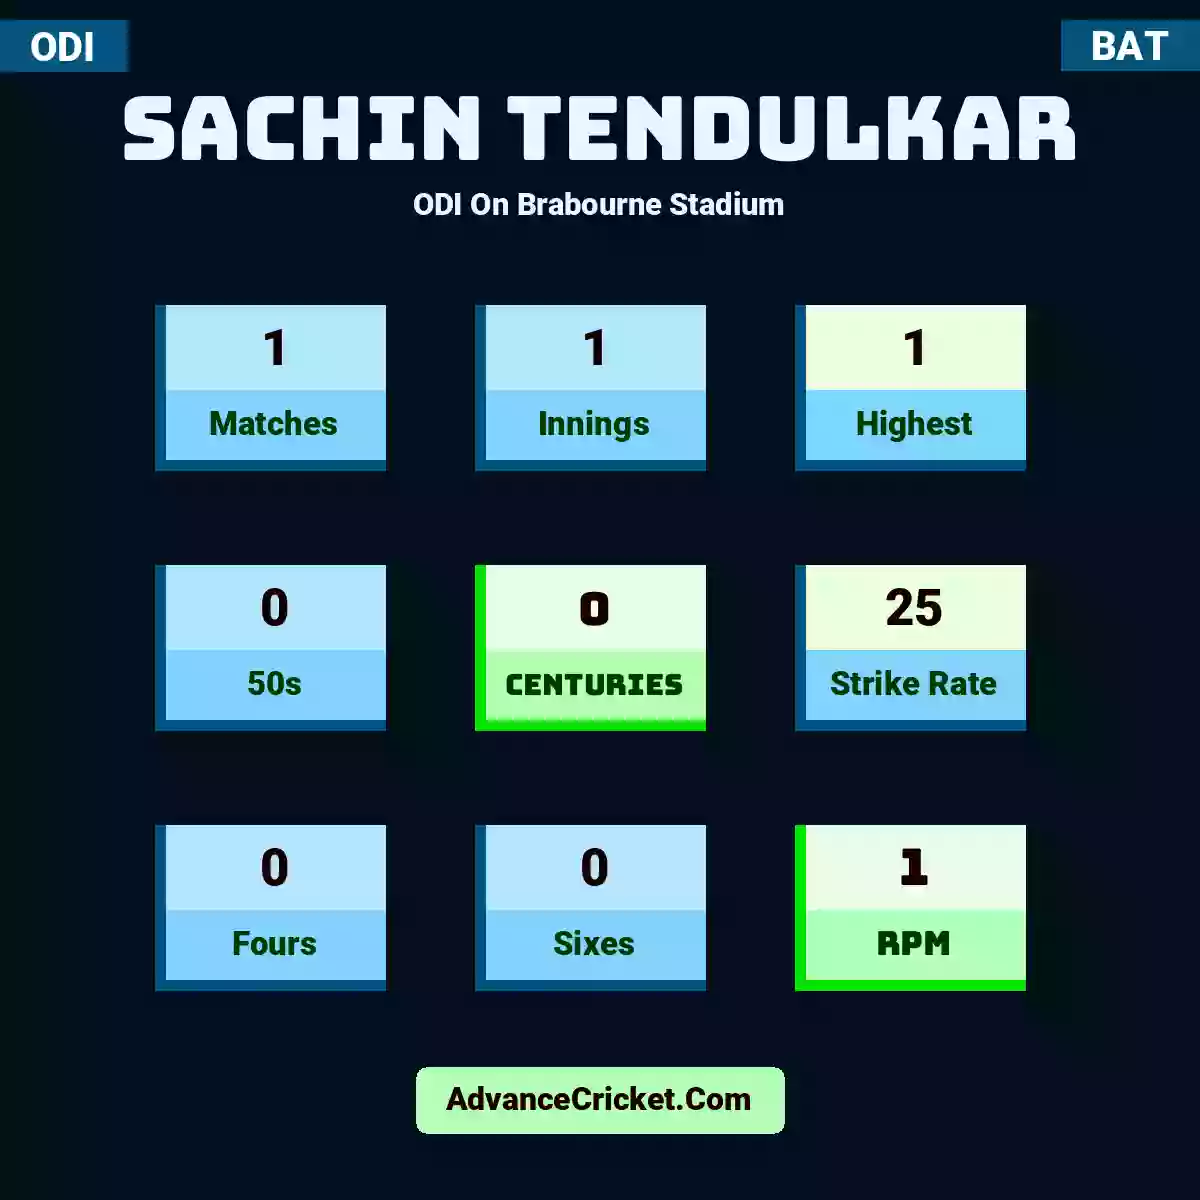 Sachin Tendulkar ODI  On Brabourne Stadium, Sachin Tendulkar played 1 matches, scored 1 runs as highest, 0 half-centuries, and 0 centuries, with a strike rate of 25. S.Tendulkar hit 0 fours and 0 sixes, with an RPM of 1.